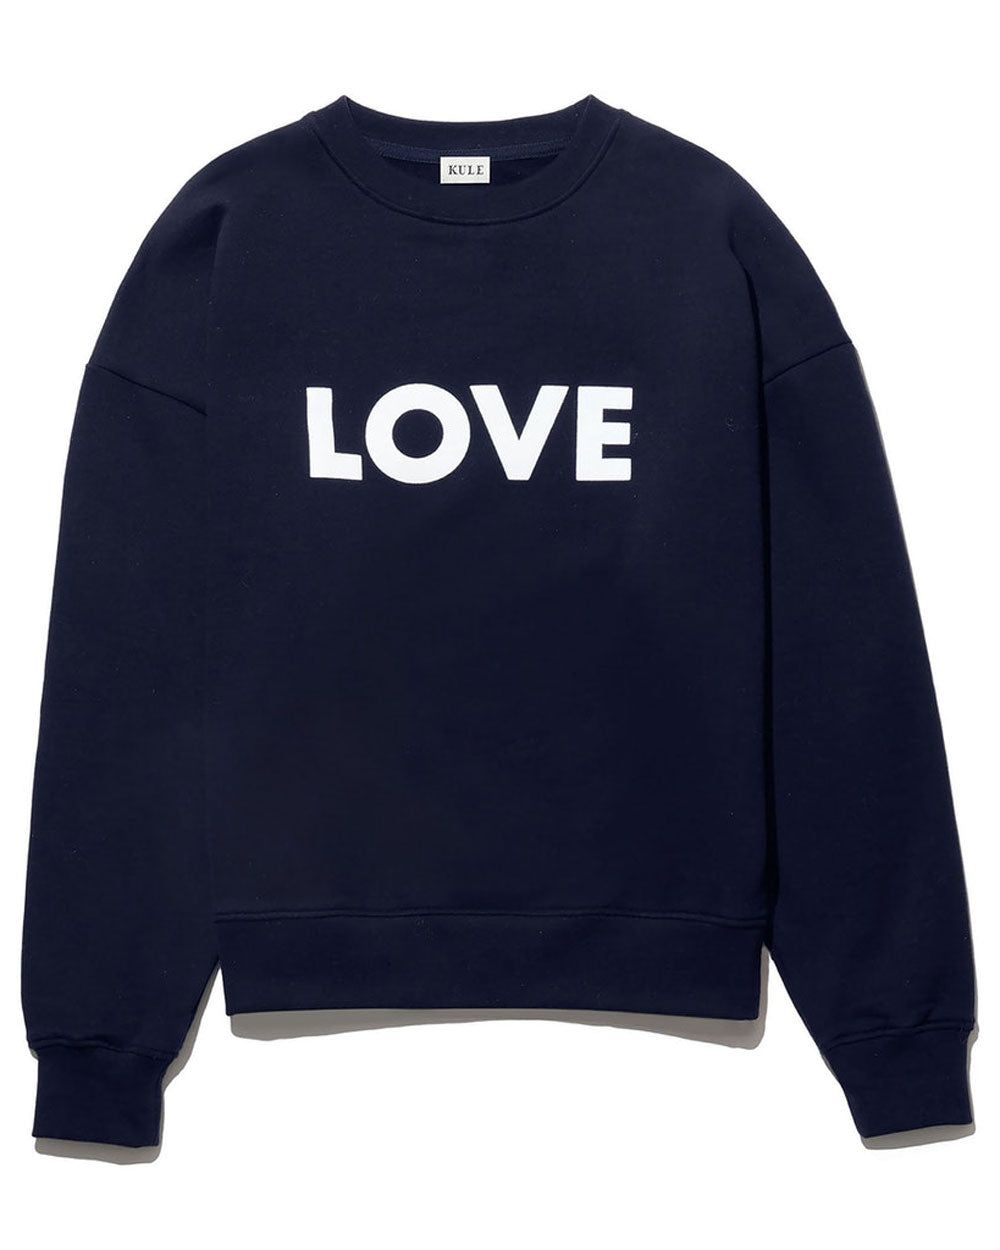 The Organic Love Sweatshirt in Navy